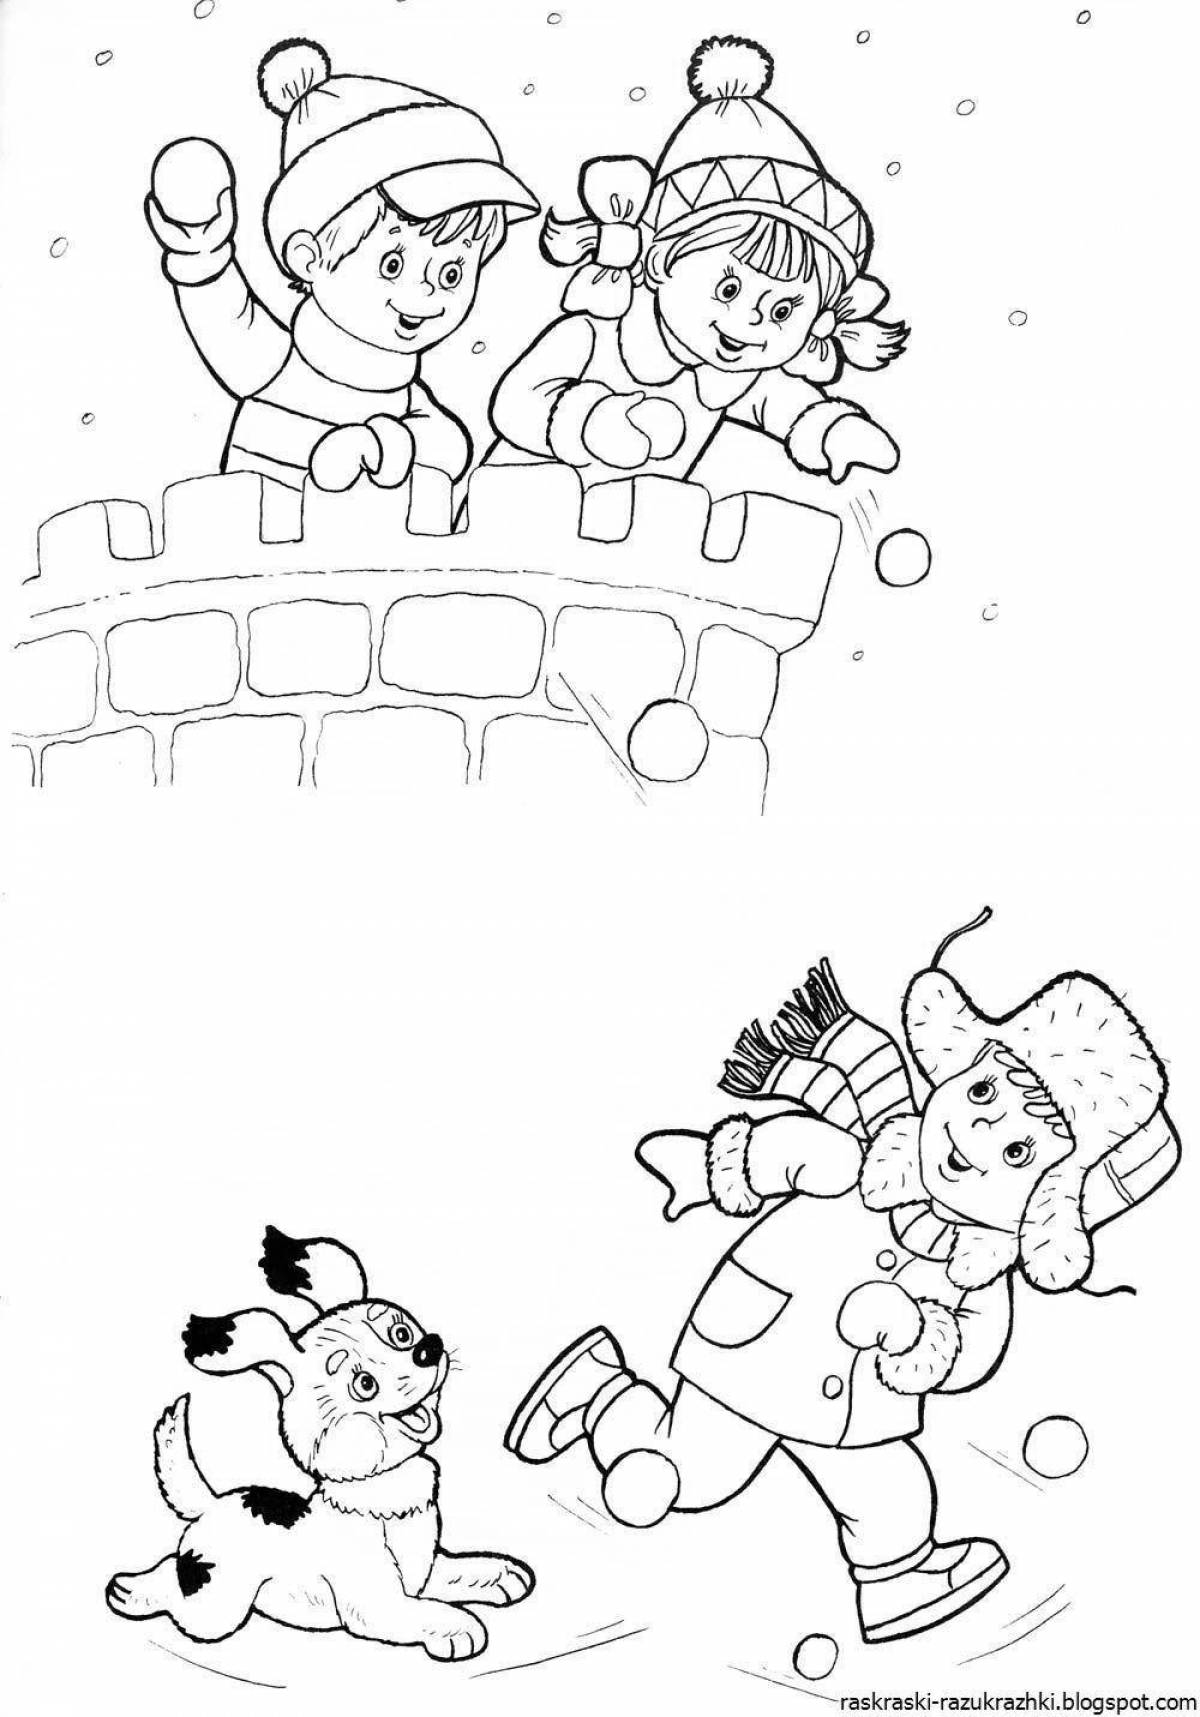 Winter Wonderland coloring page